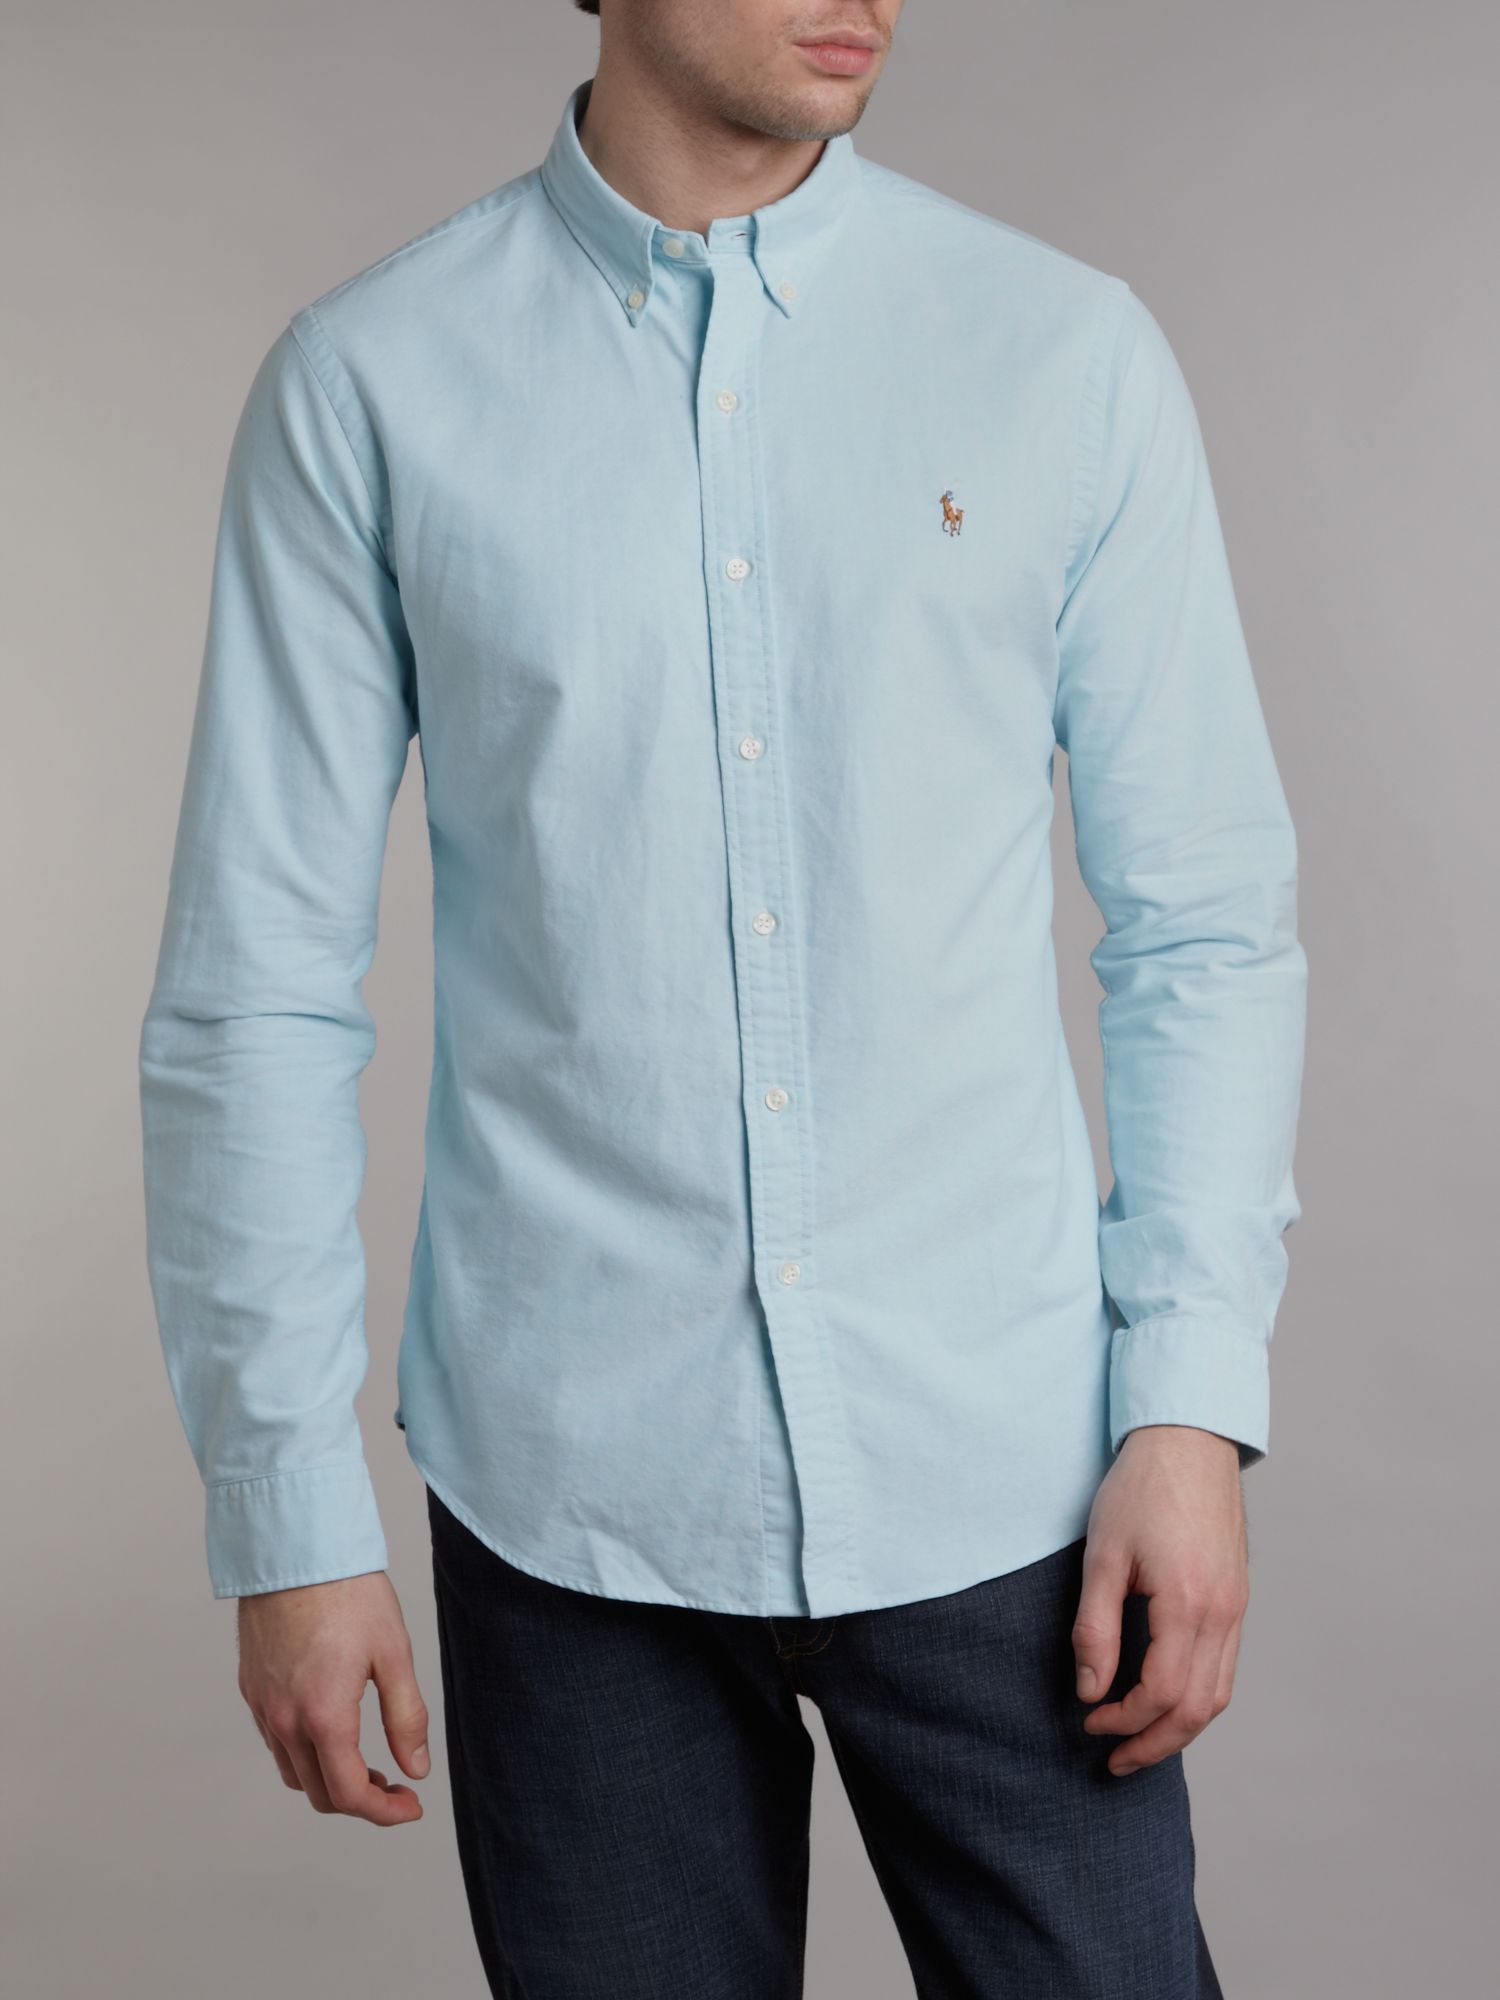 Polo ralph lauren Long Sleeved Oxford Shirt in Blue for Men | Lyst